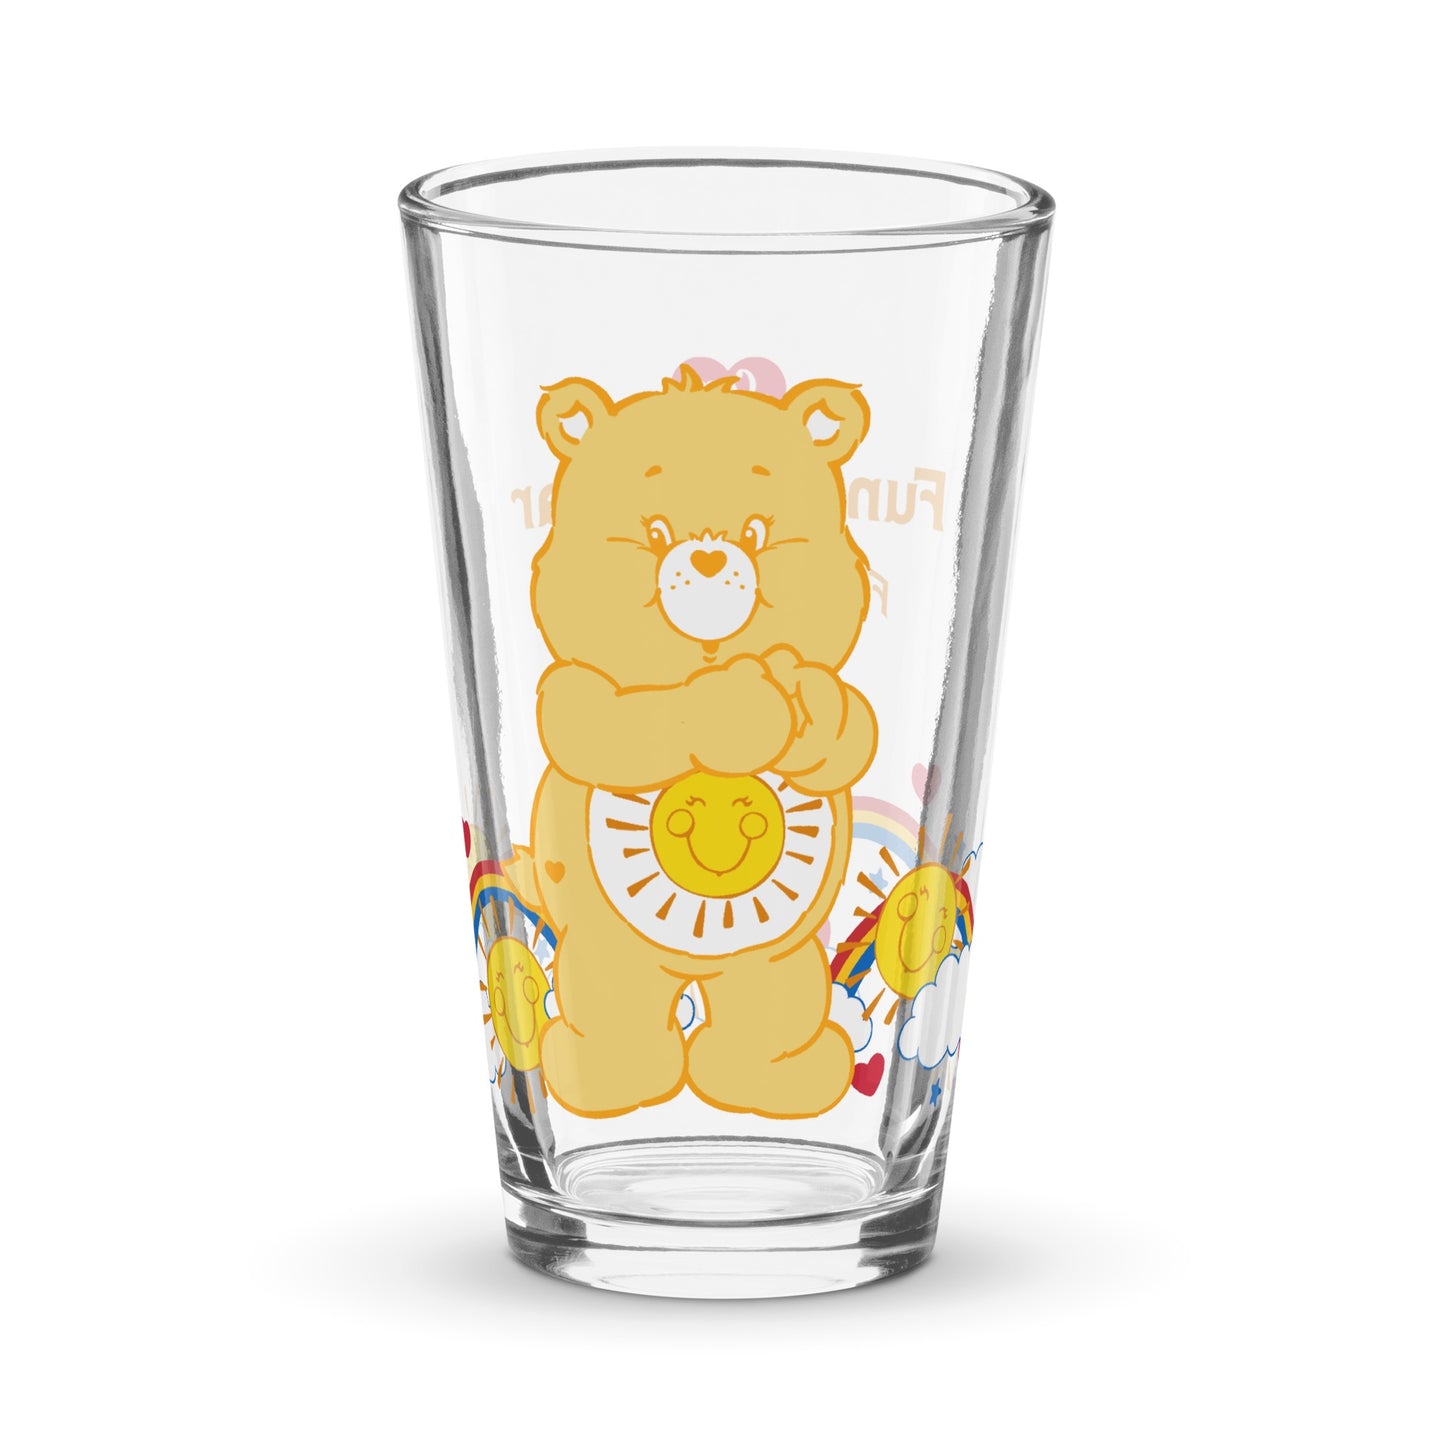 Care Bears Funshine Bear™ Pint Glass